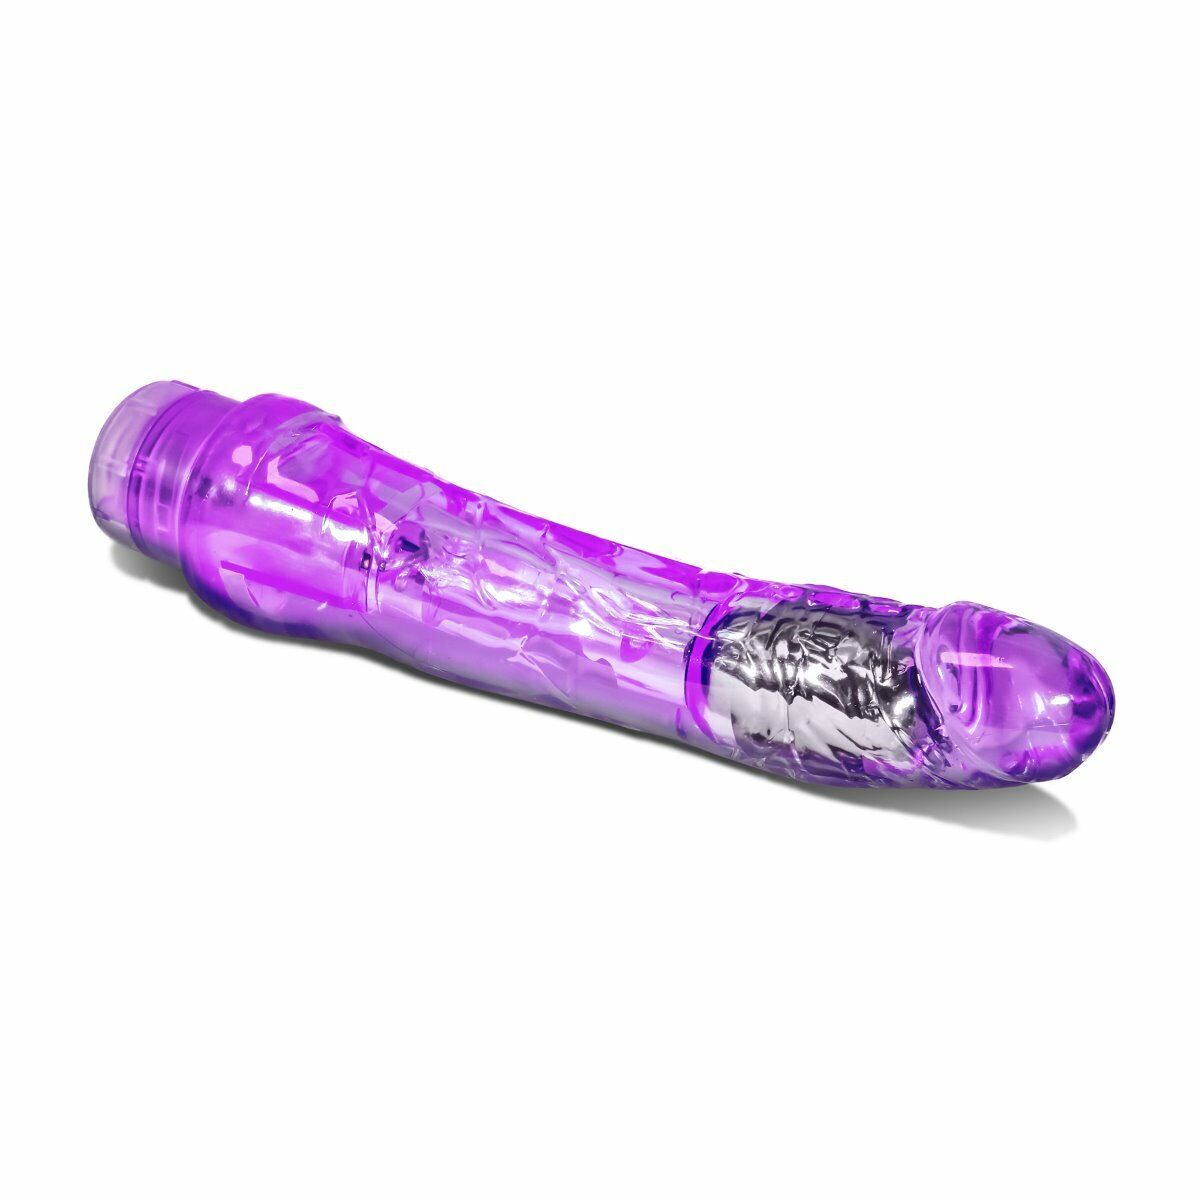 8" Soft Jelly Realistic Clit G-spot Anal Vibe Vibrator Dildo Sex-toys for Women